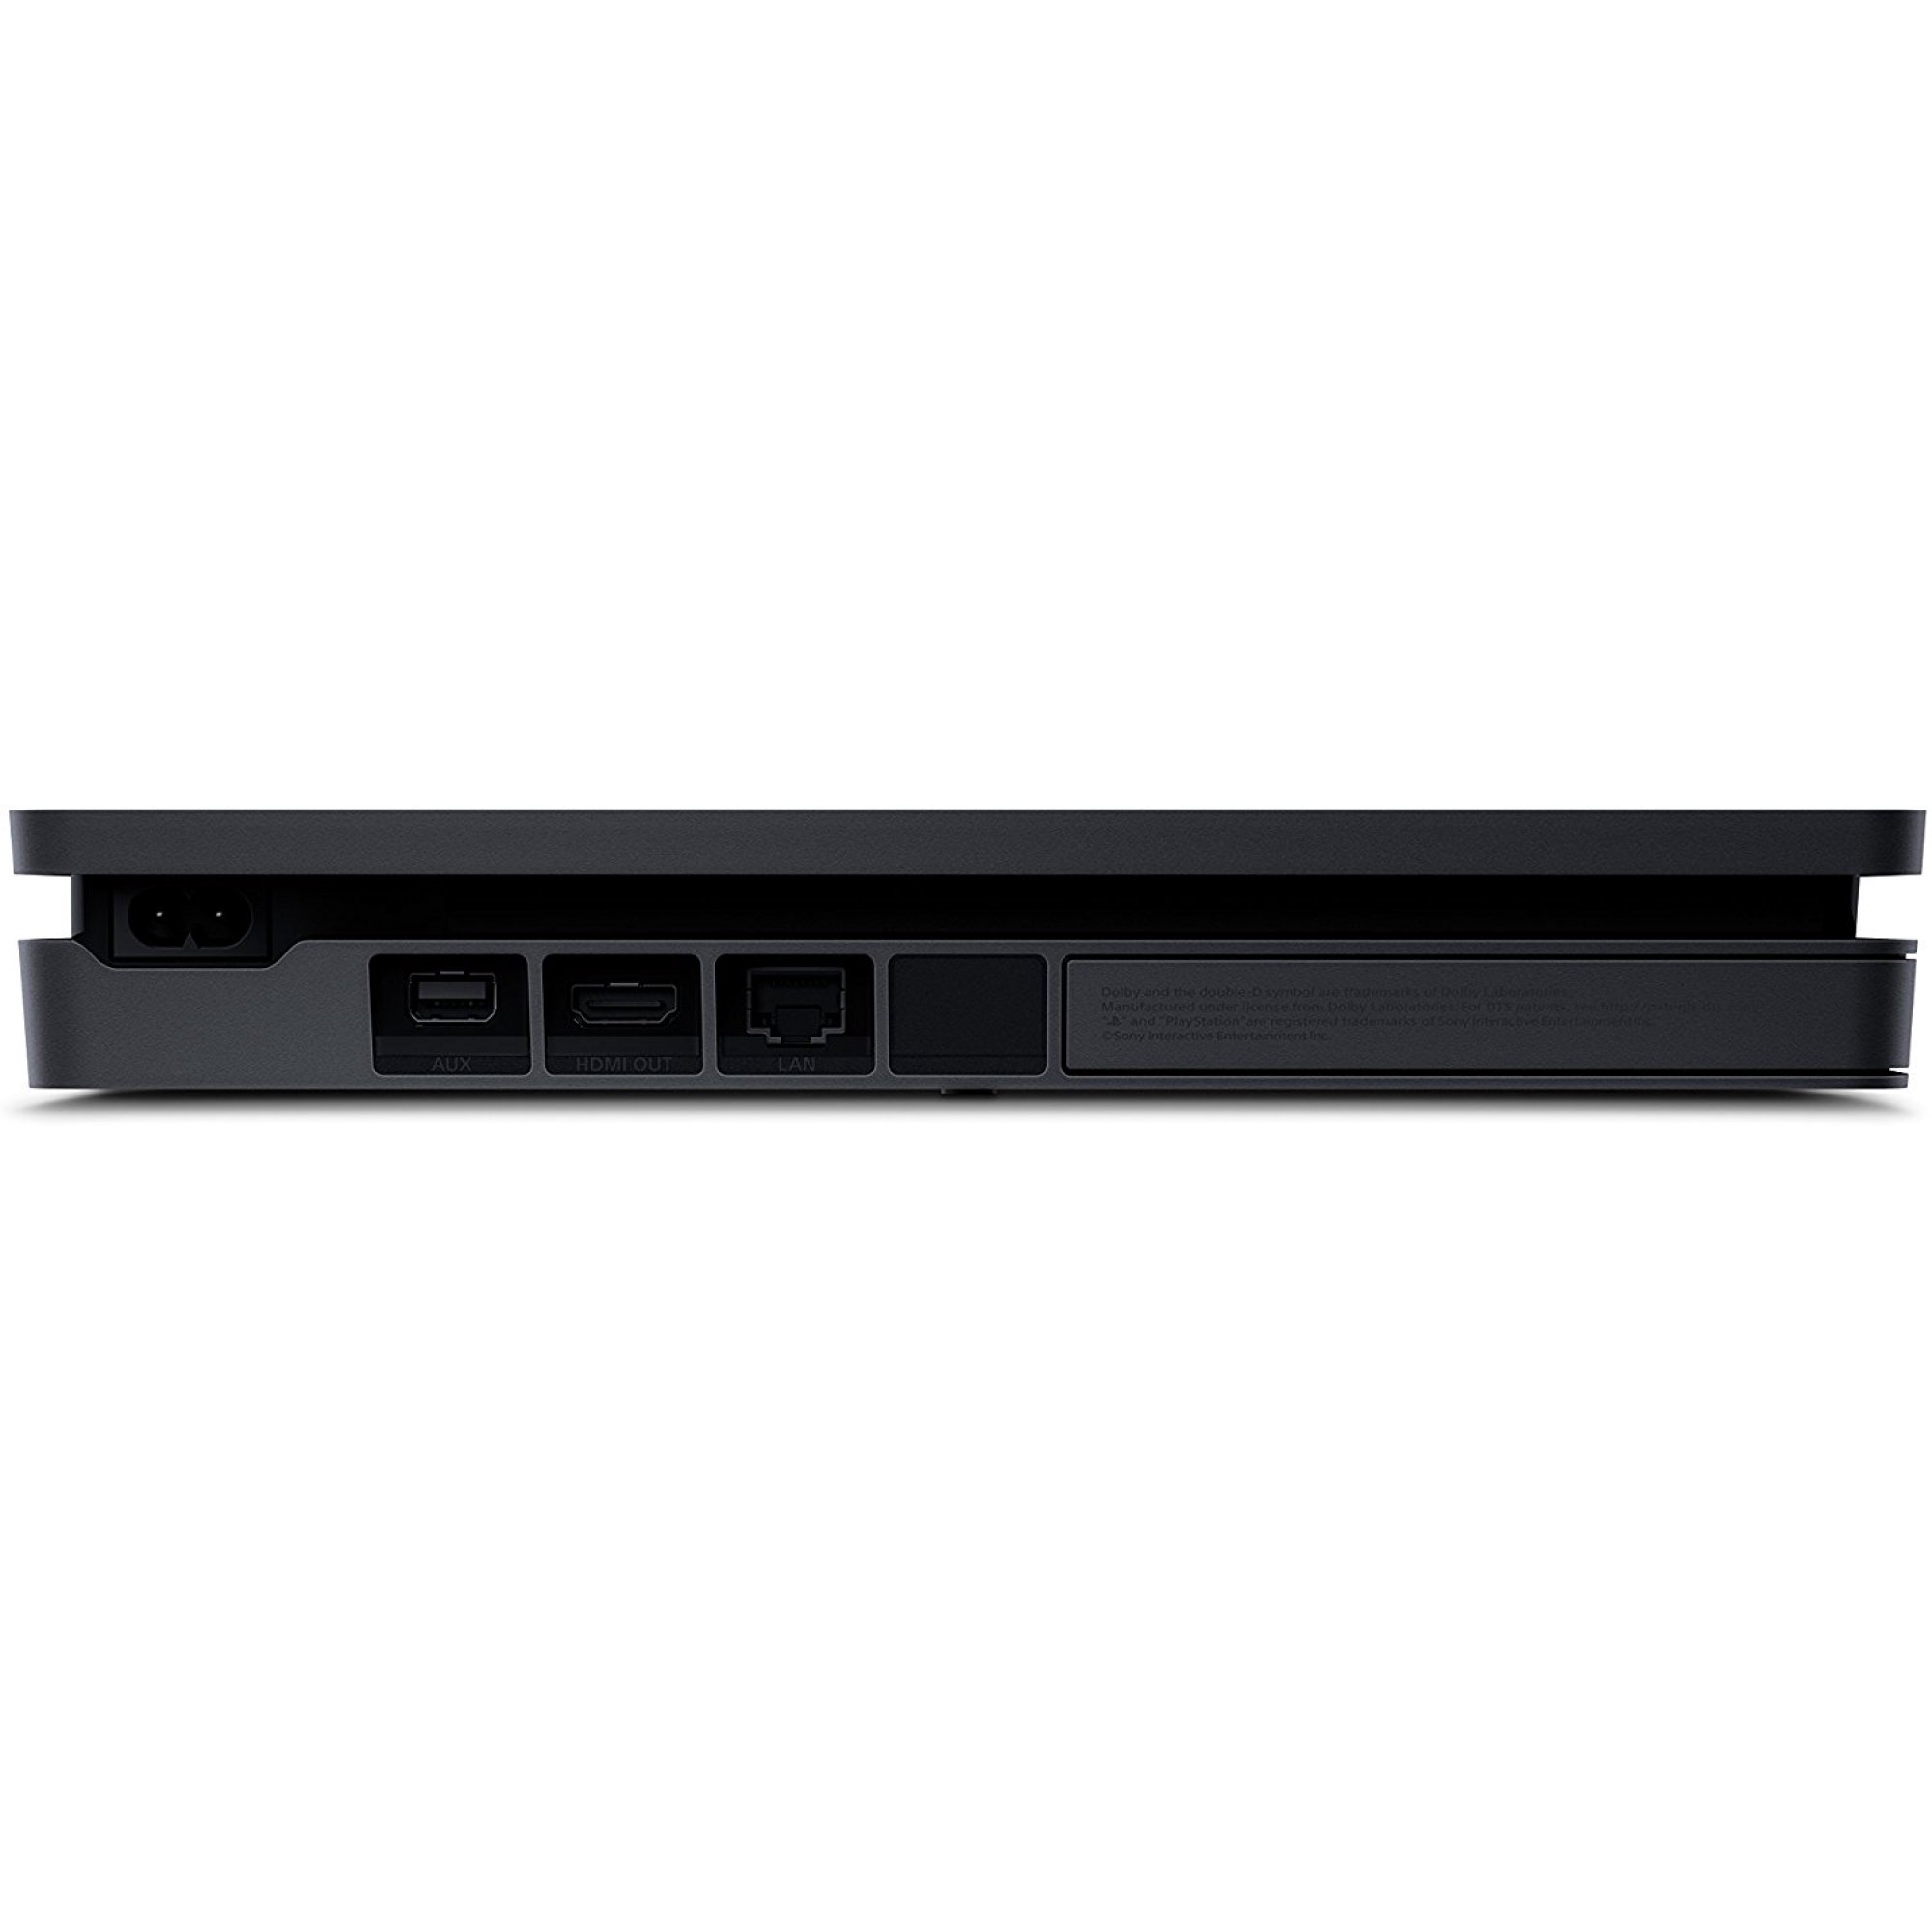 Sony PlayStation 4 Slim 1TB Gaming Console, Black, CUH-2115B - image 4 of 9